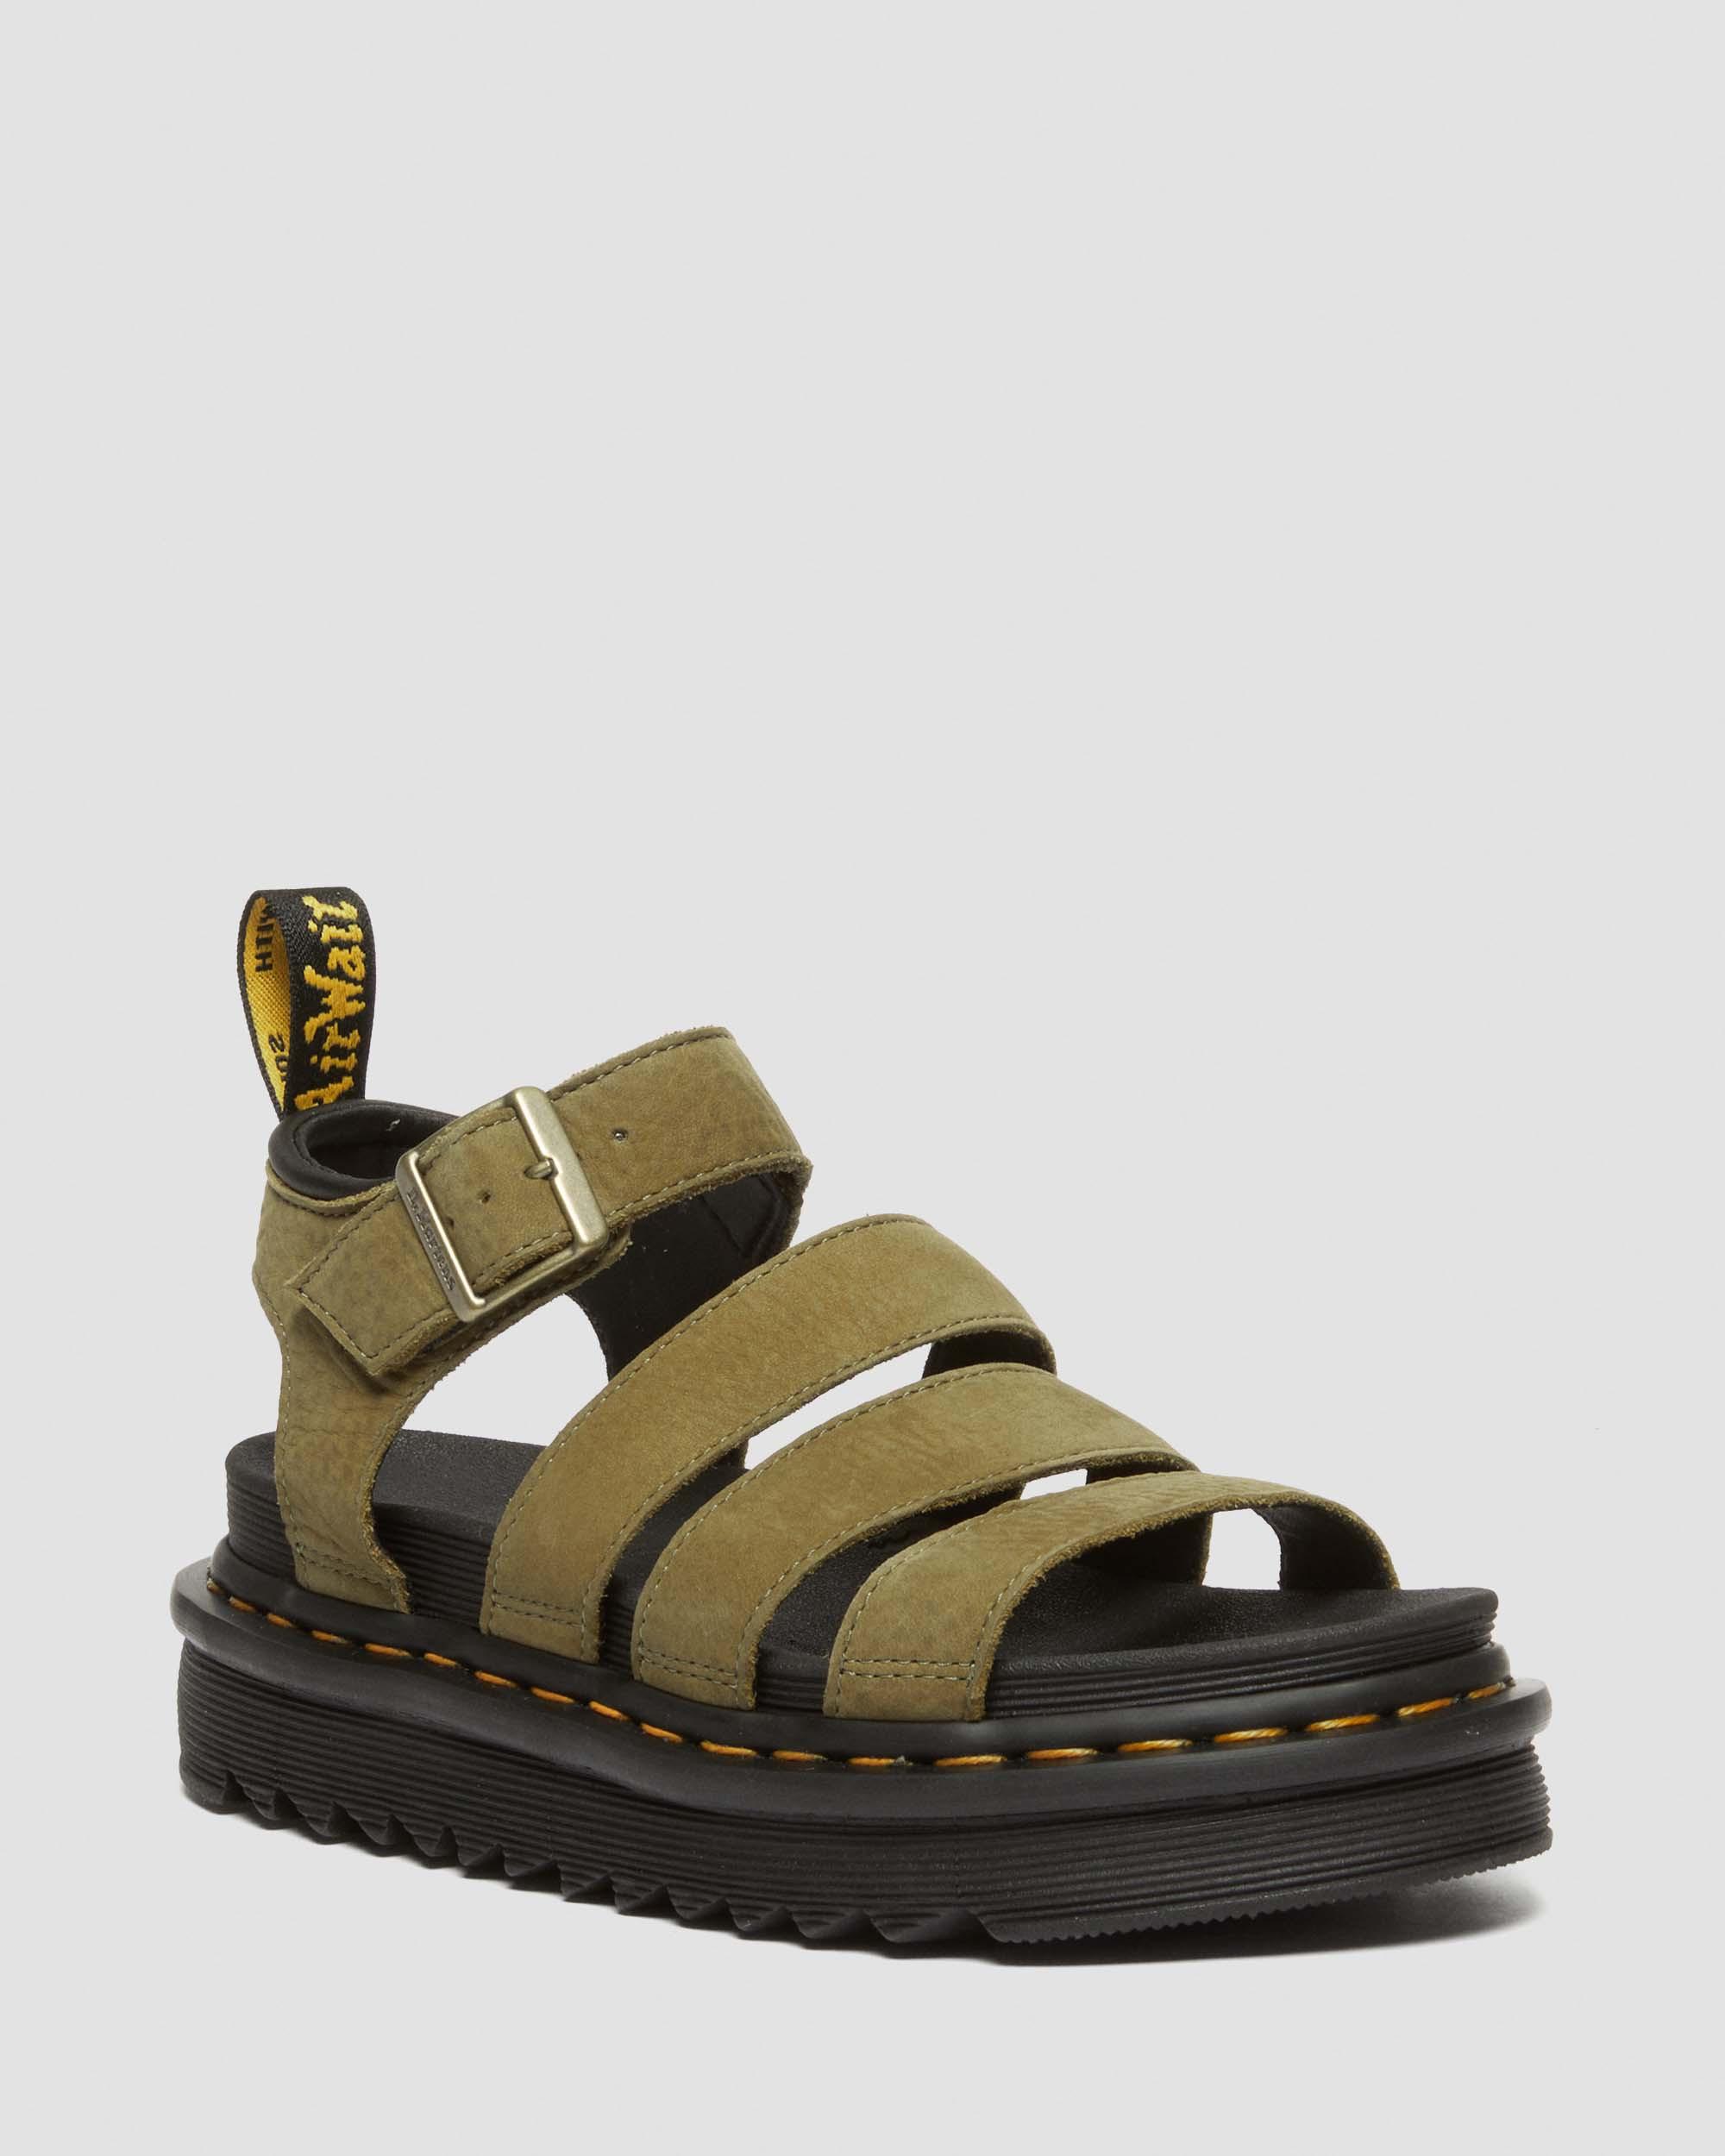 Blaire-sandaler i Tumbled Nubuck-læder